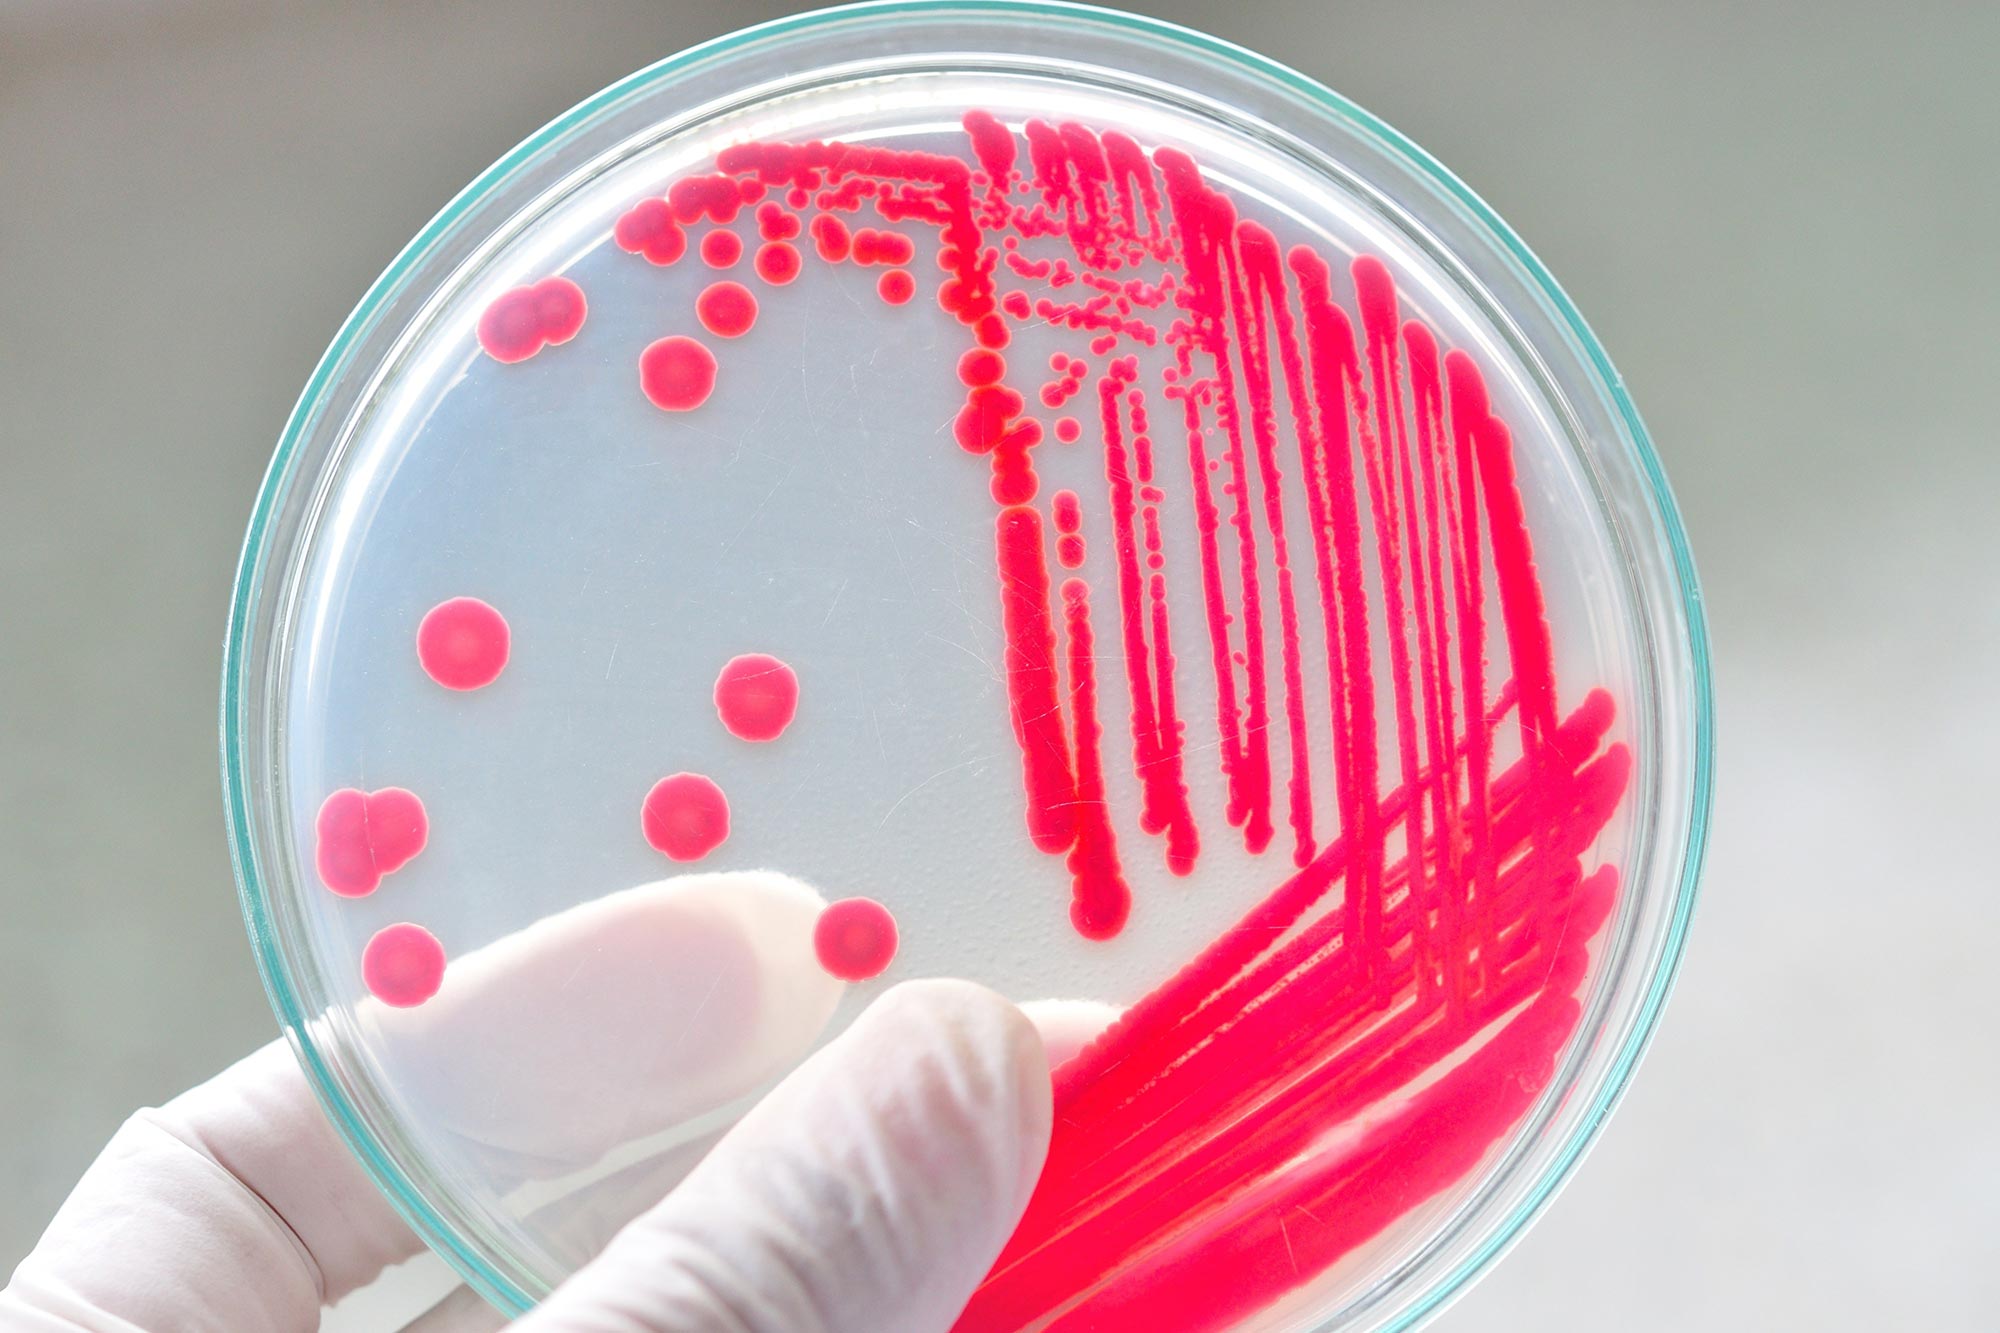 Holding-Petri-Dish-With-Bacteria(1).jpg